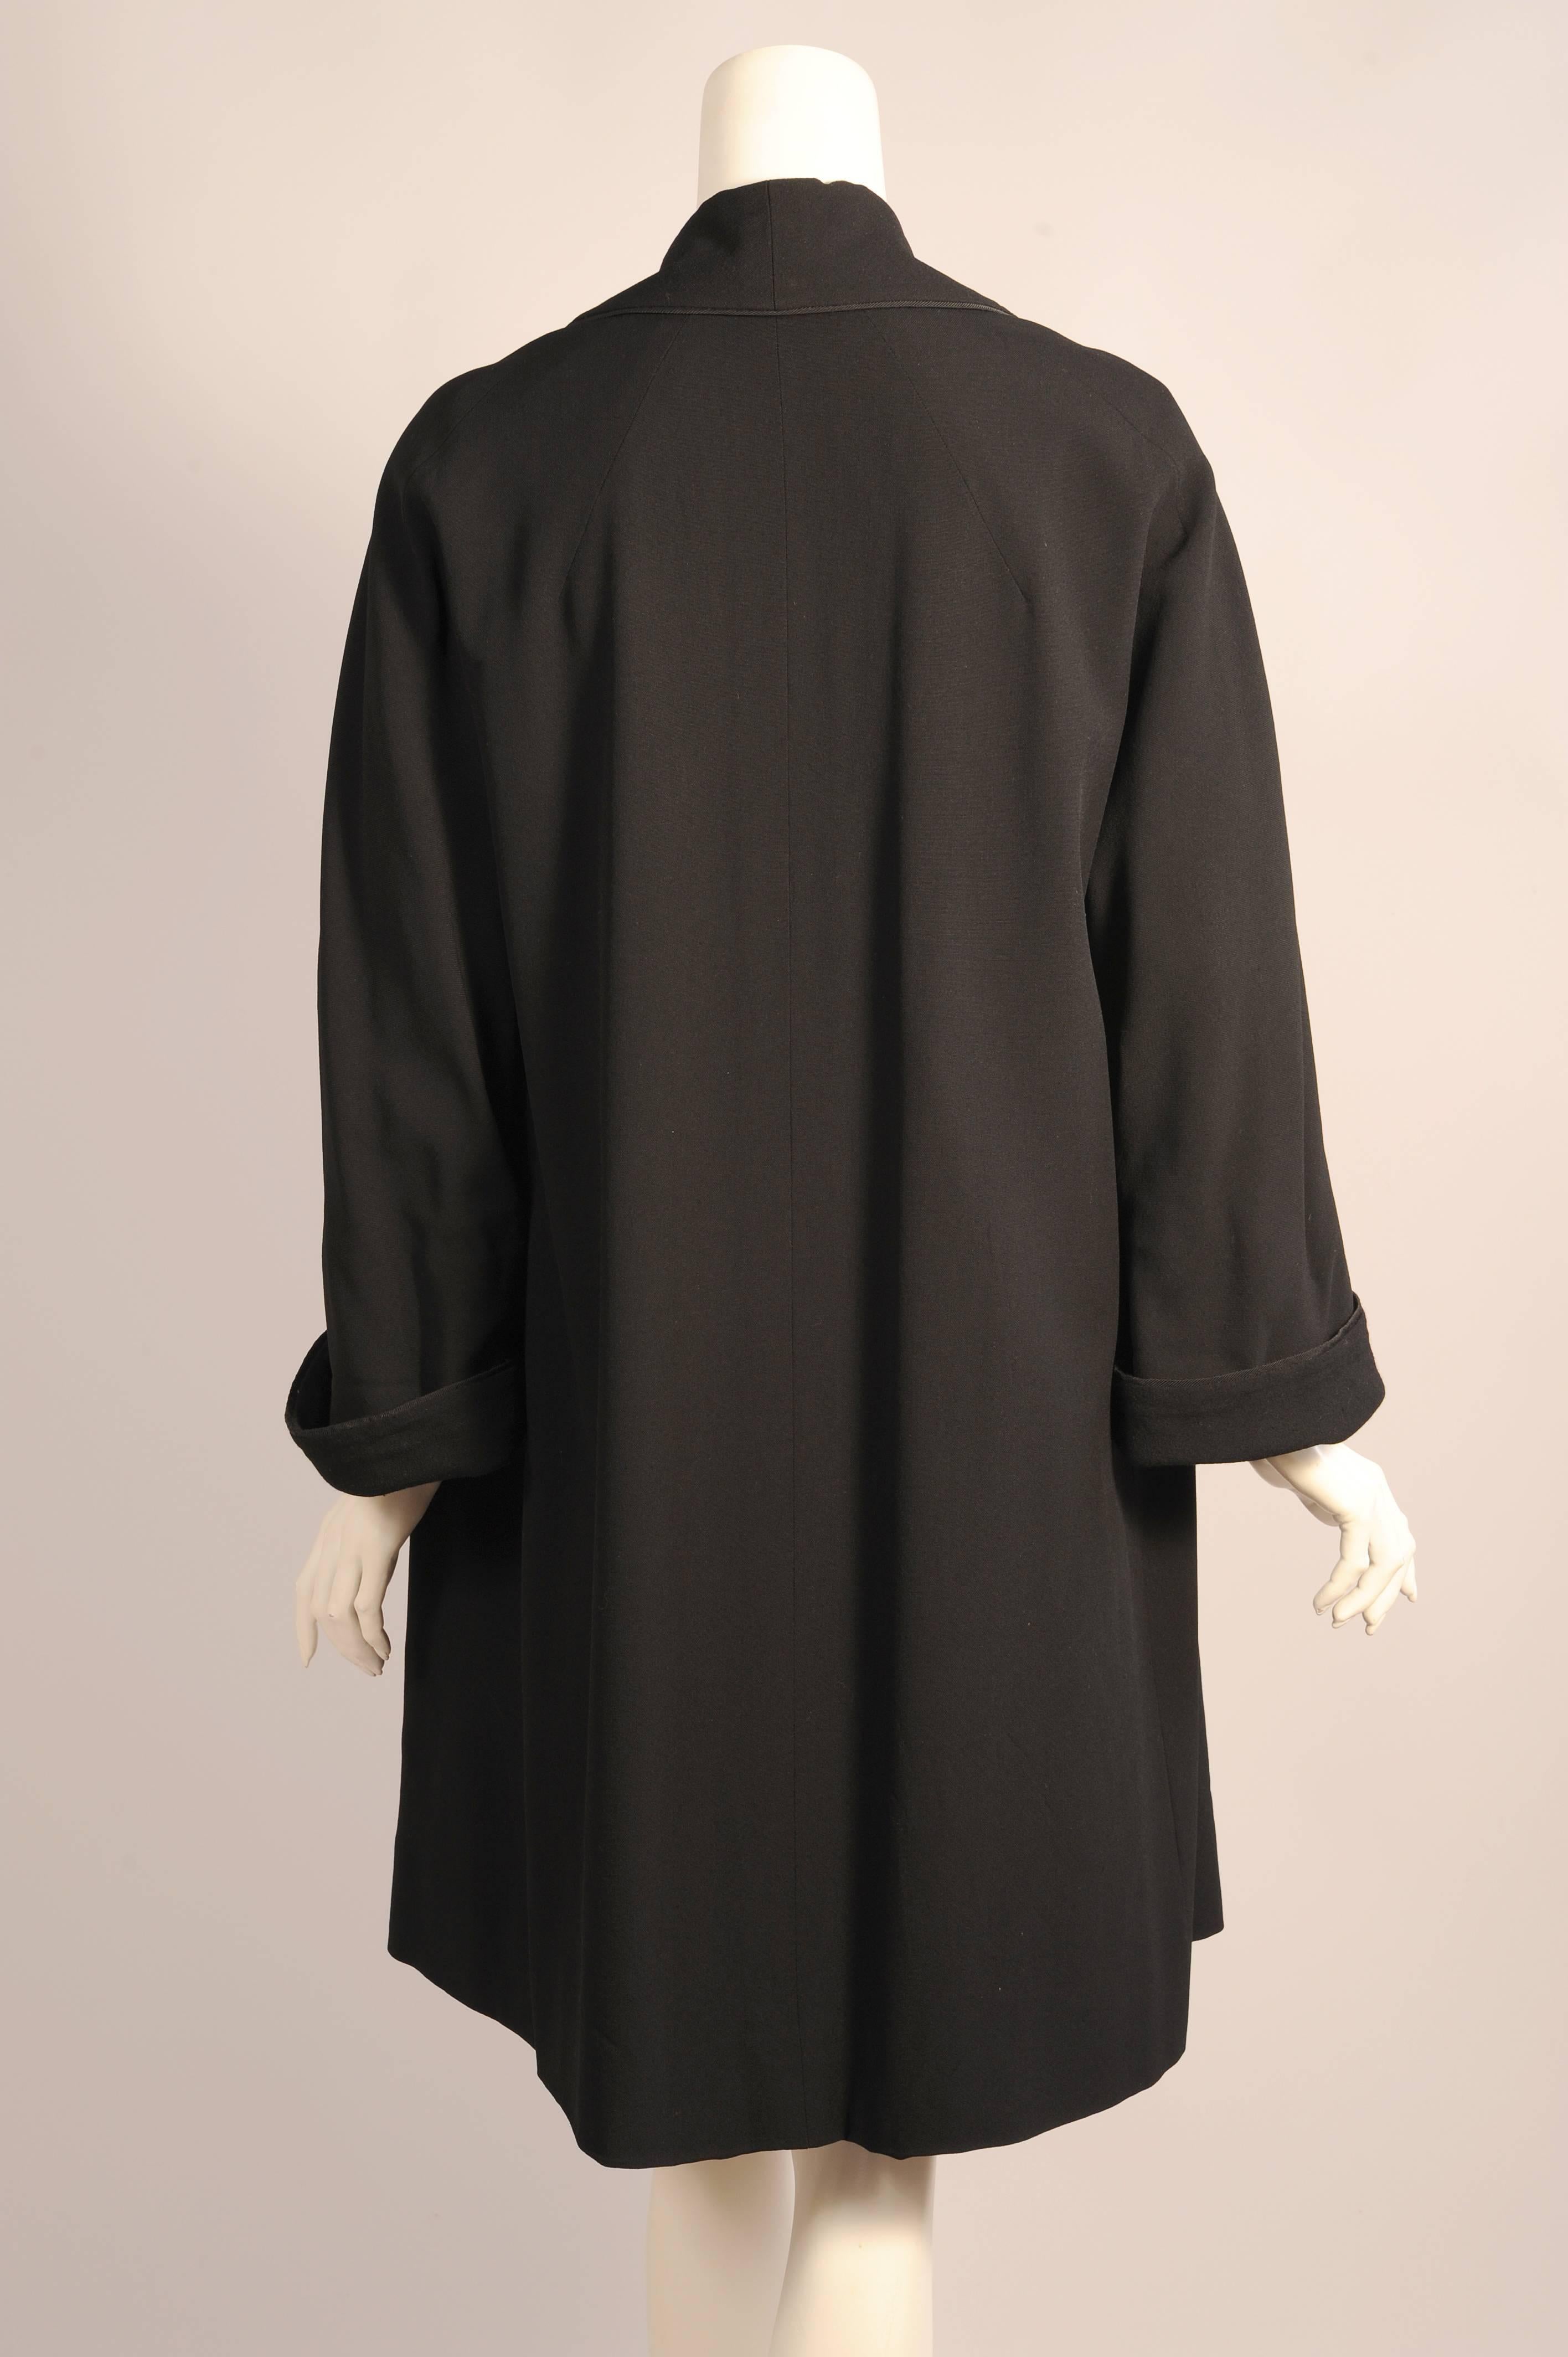 Women's Pierre Balmain Numbered Haute Couture Black Wool Coat, 1950s 